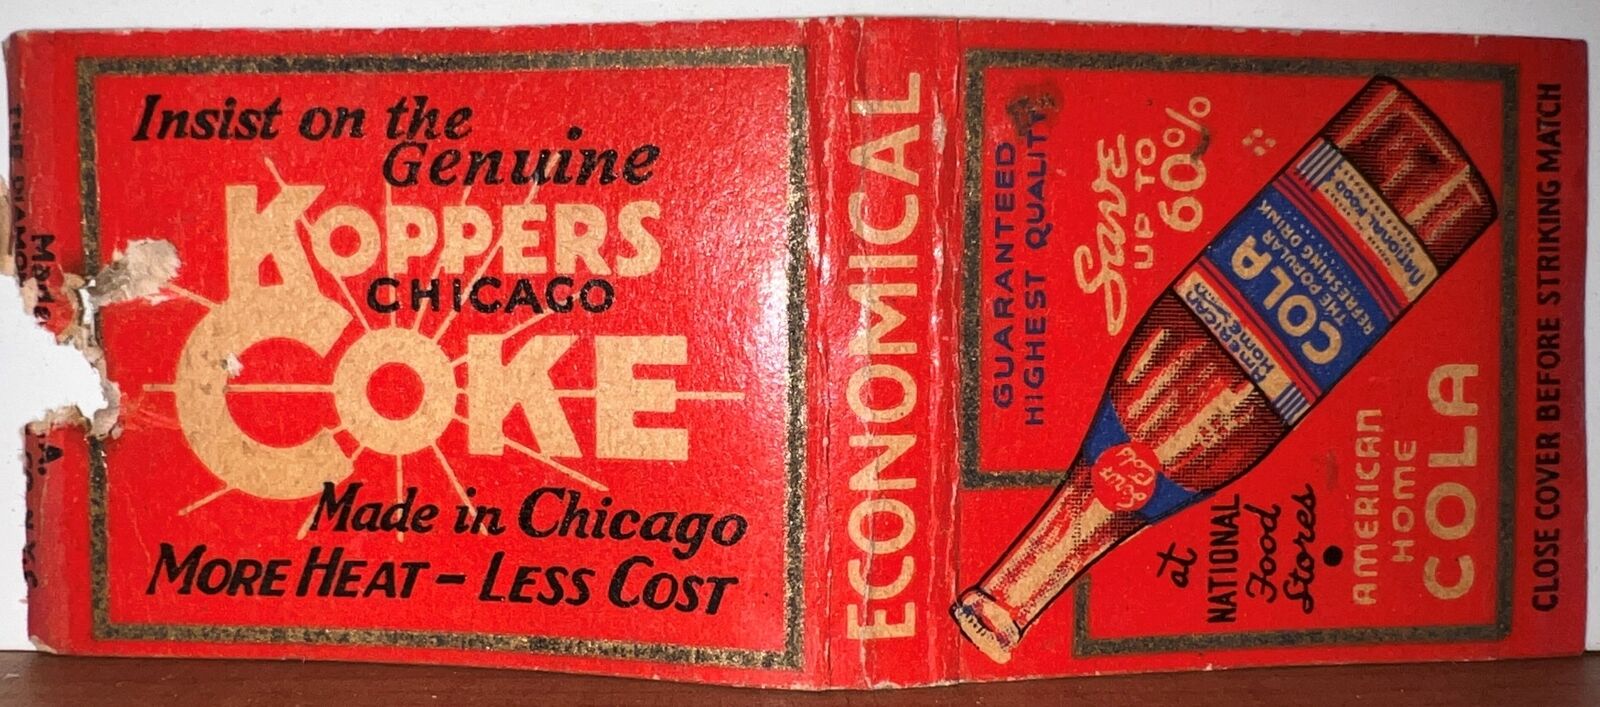 Koppers Chicago Coke American Home Cola Vintage Bobtail Matchbook Cover